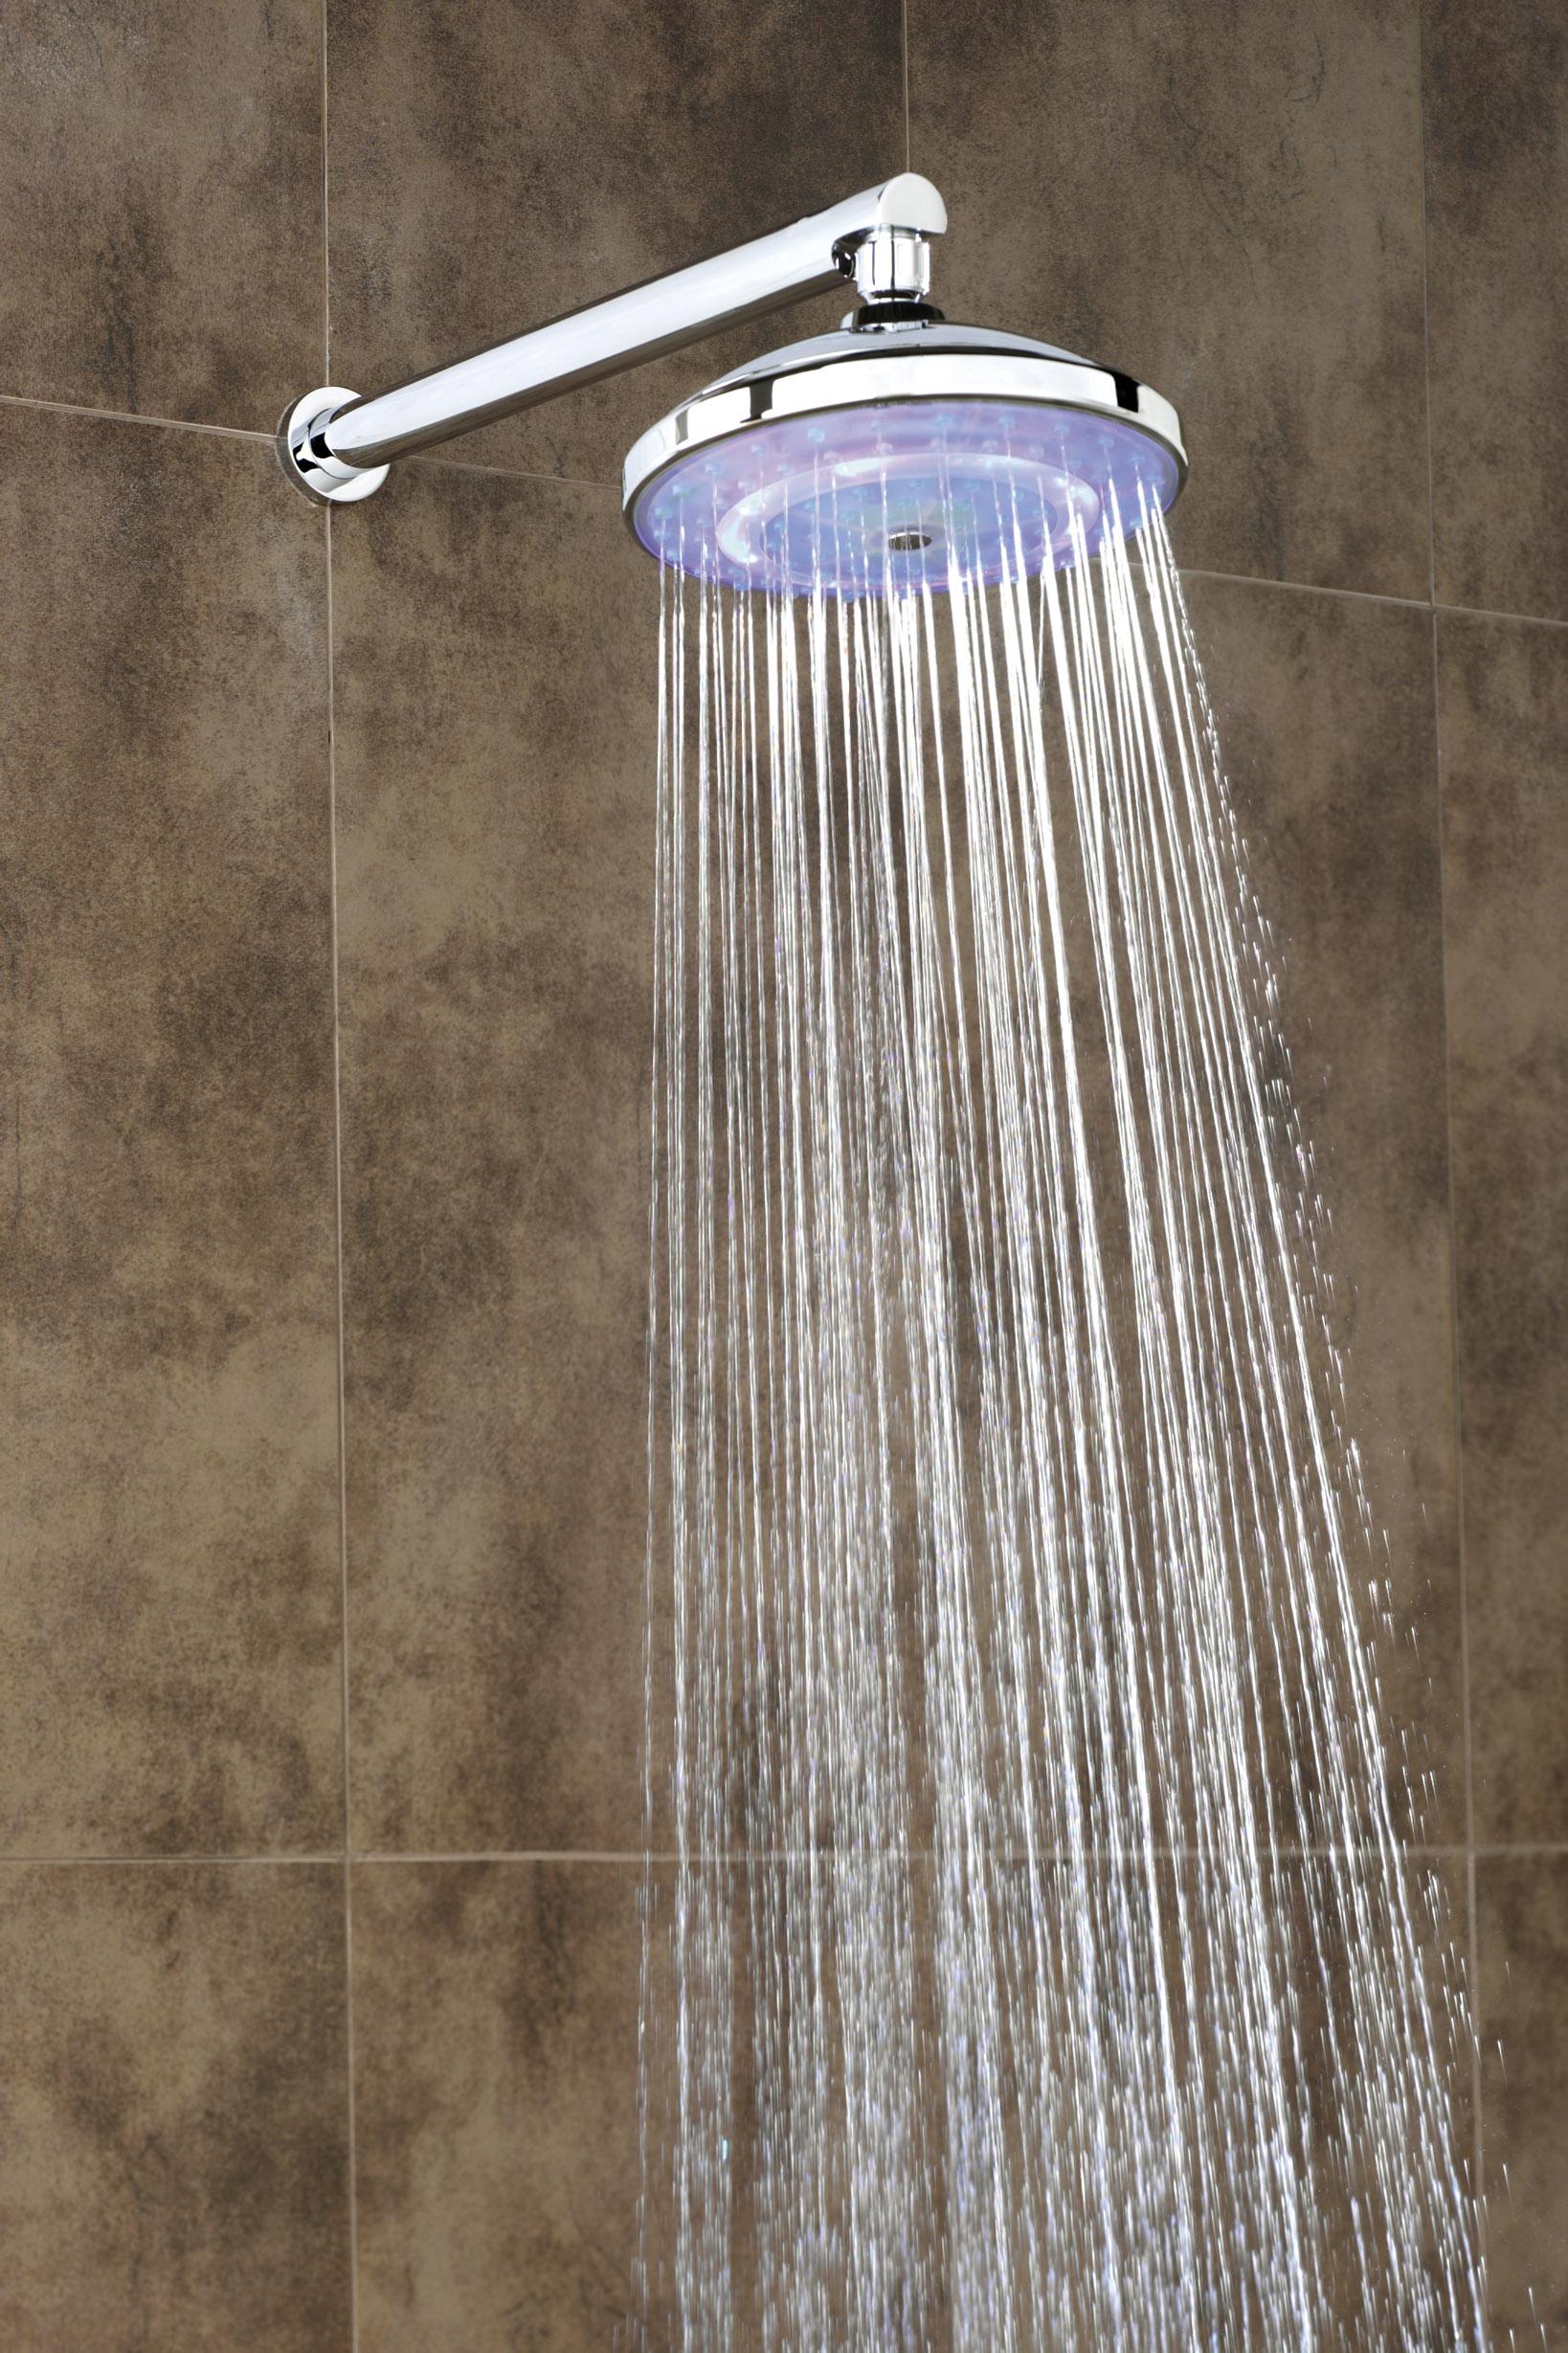 「bathroom shower」の画像検索結果